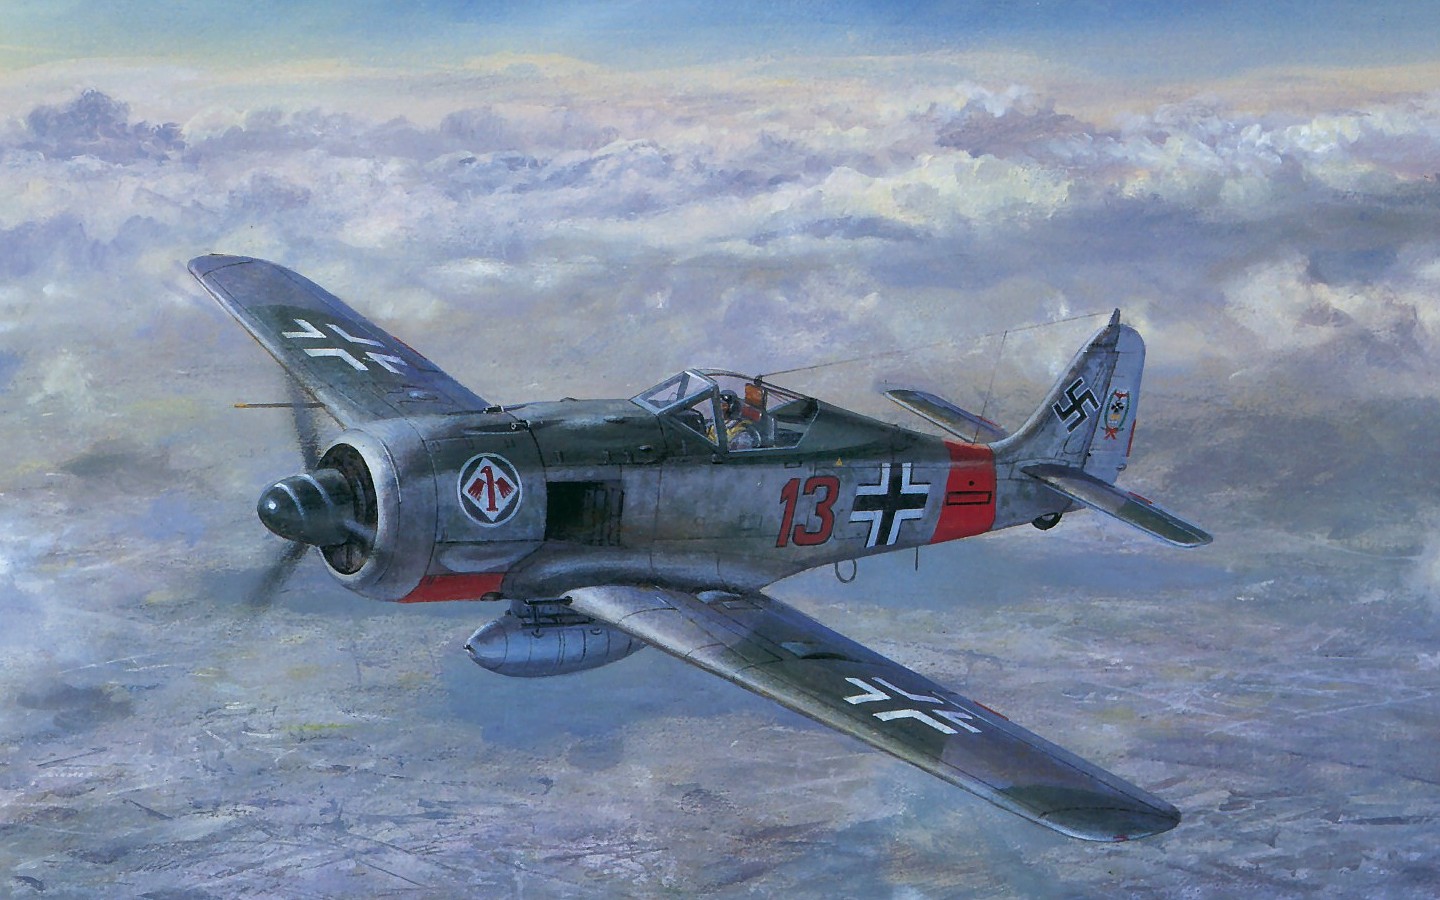 Télécharger des fonds d'écran Focke Wulf Fw 190 HD